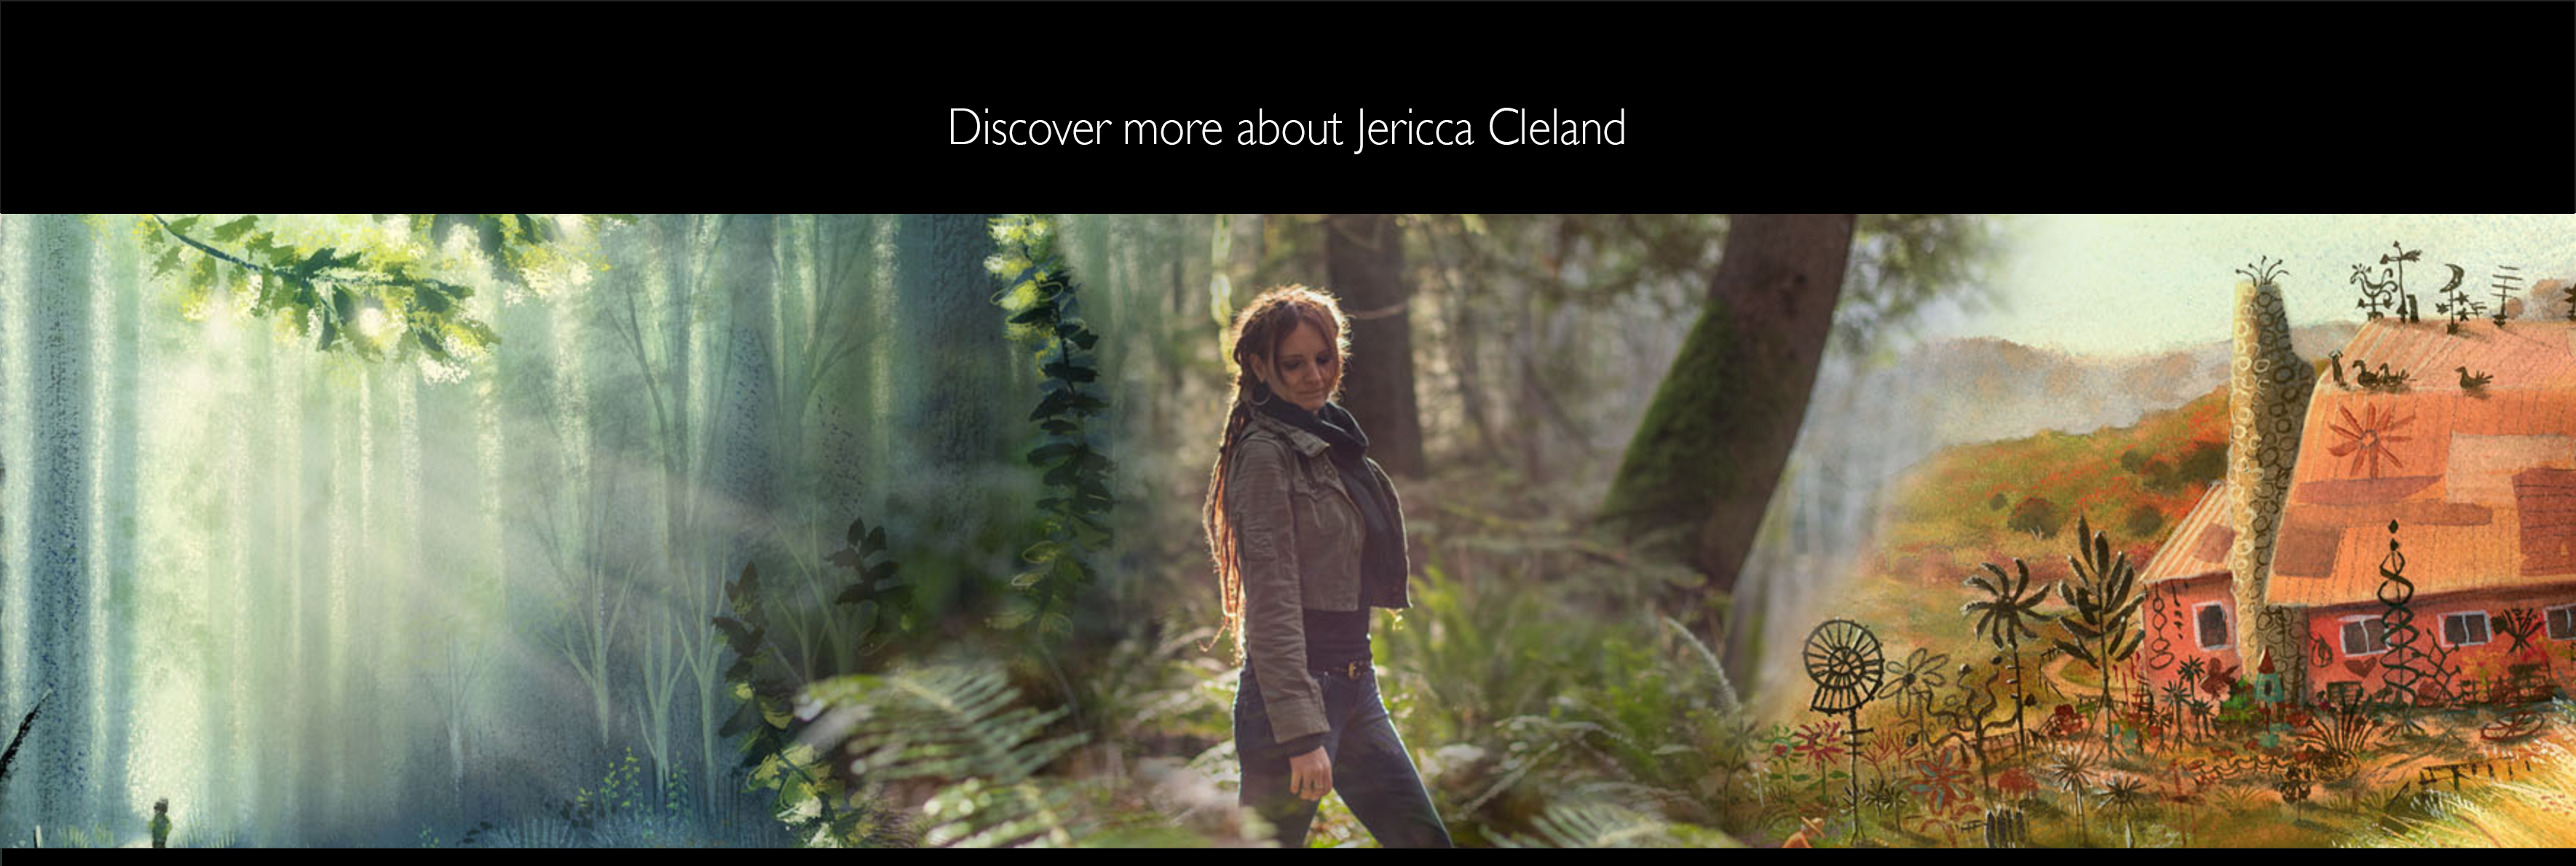 Jericca Cleland Website